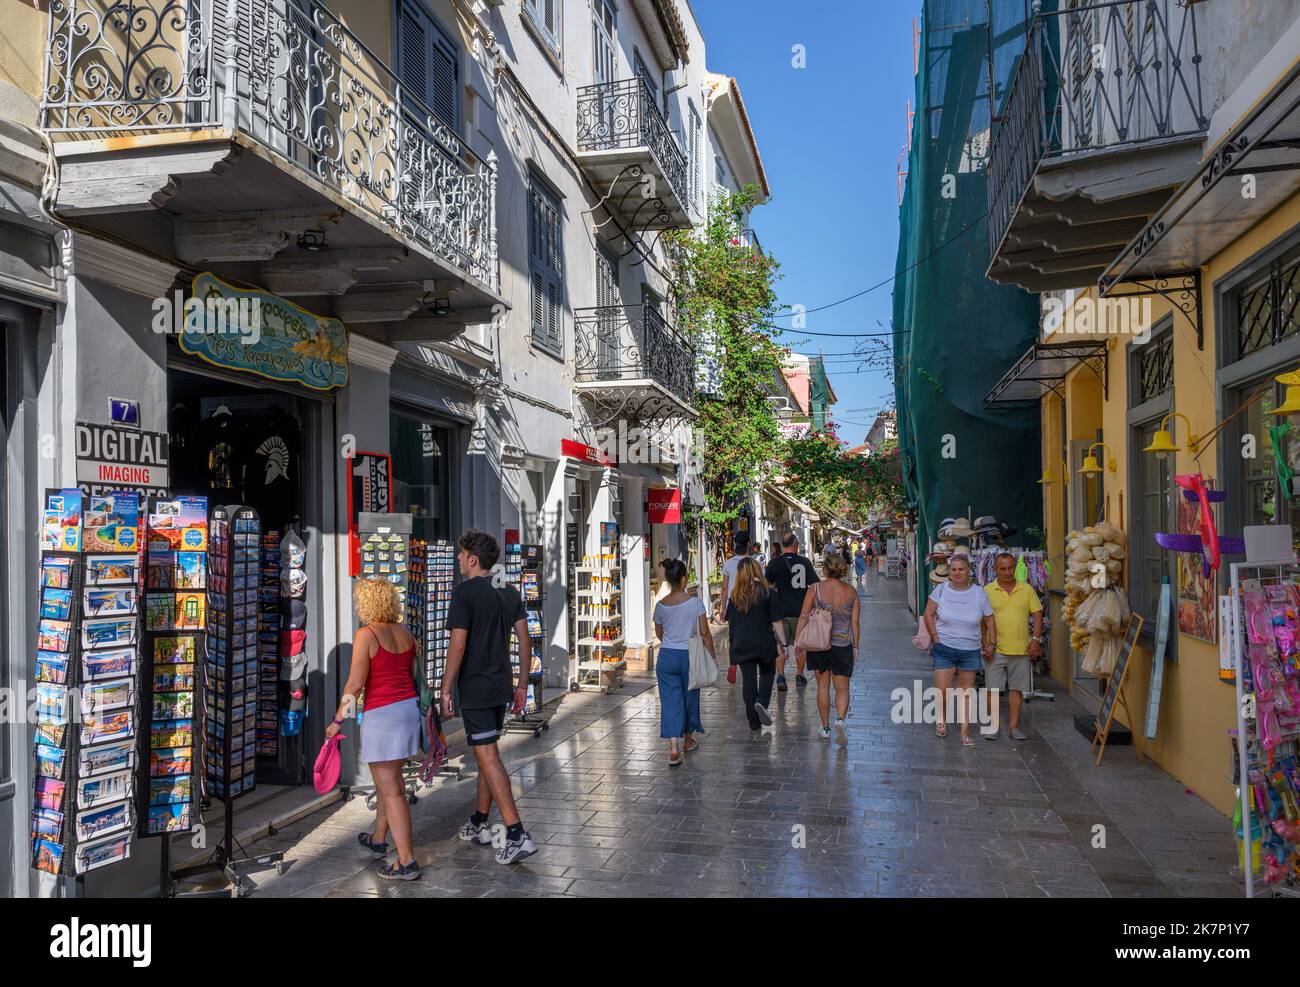 Street in the old town centre, Nafplio (Nafplion), Peloponnese, Greece Stock Photo